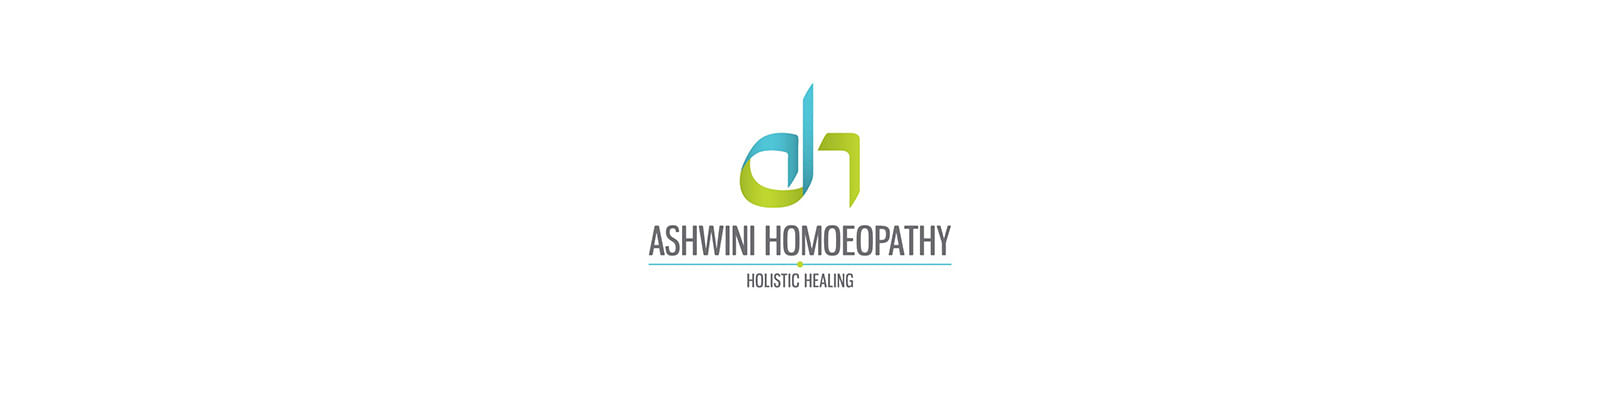 Ashwini Homoeopathy